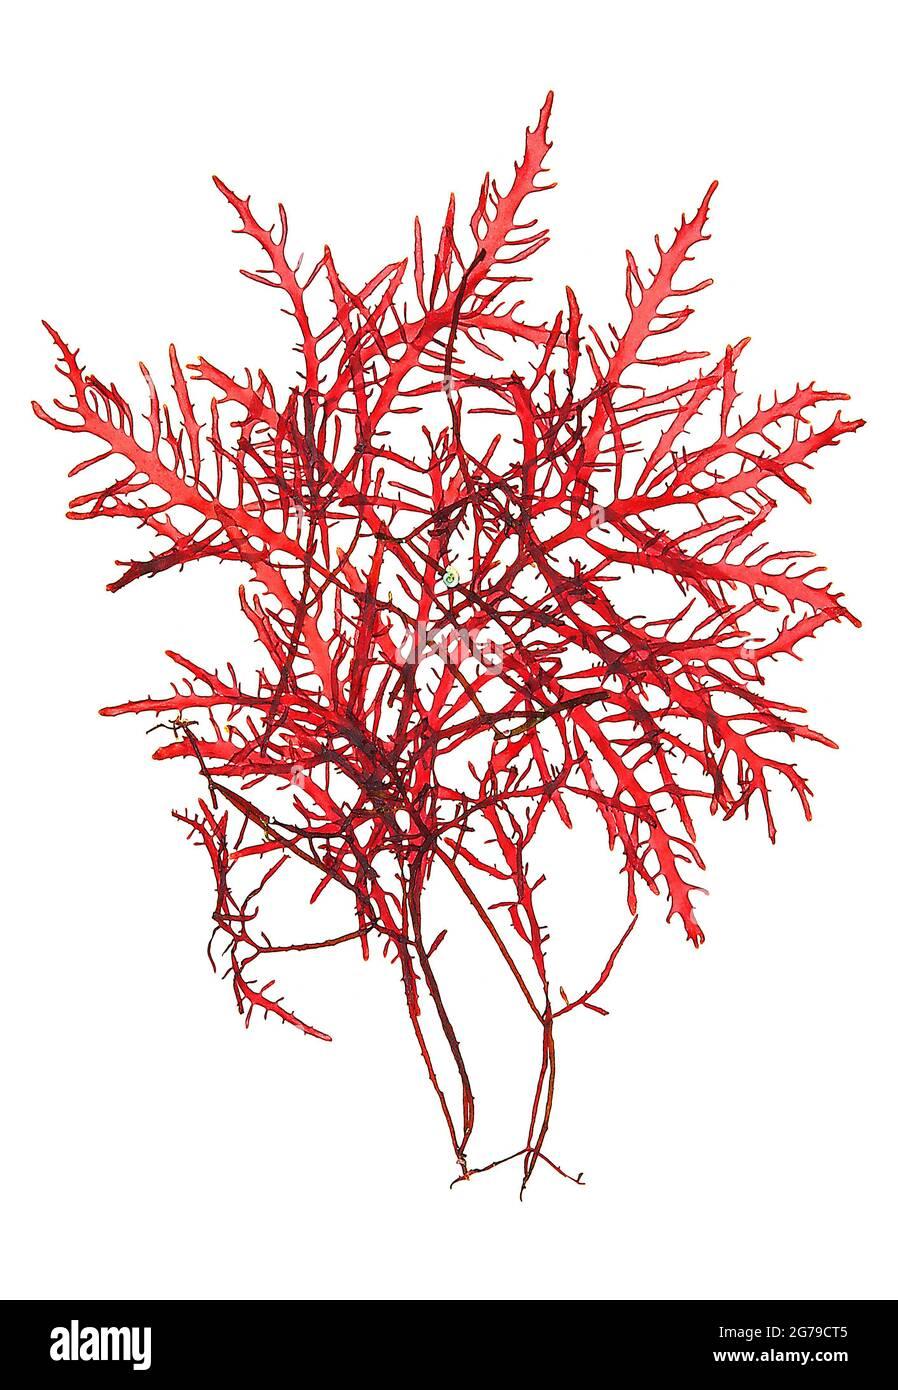 gelidium-spinosum-sg-gmelin-pc-silva-red-alga-florideophyceae-2G79CT5.jpg